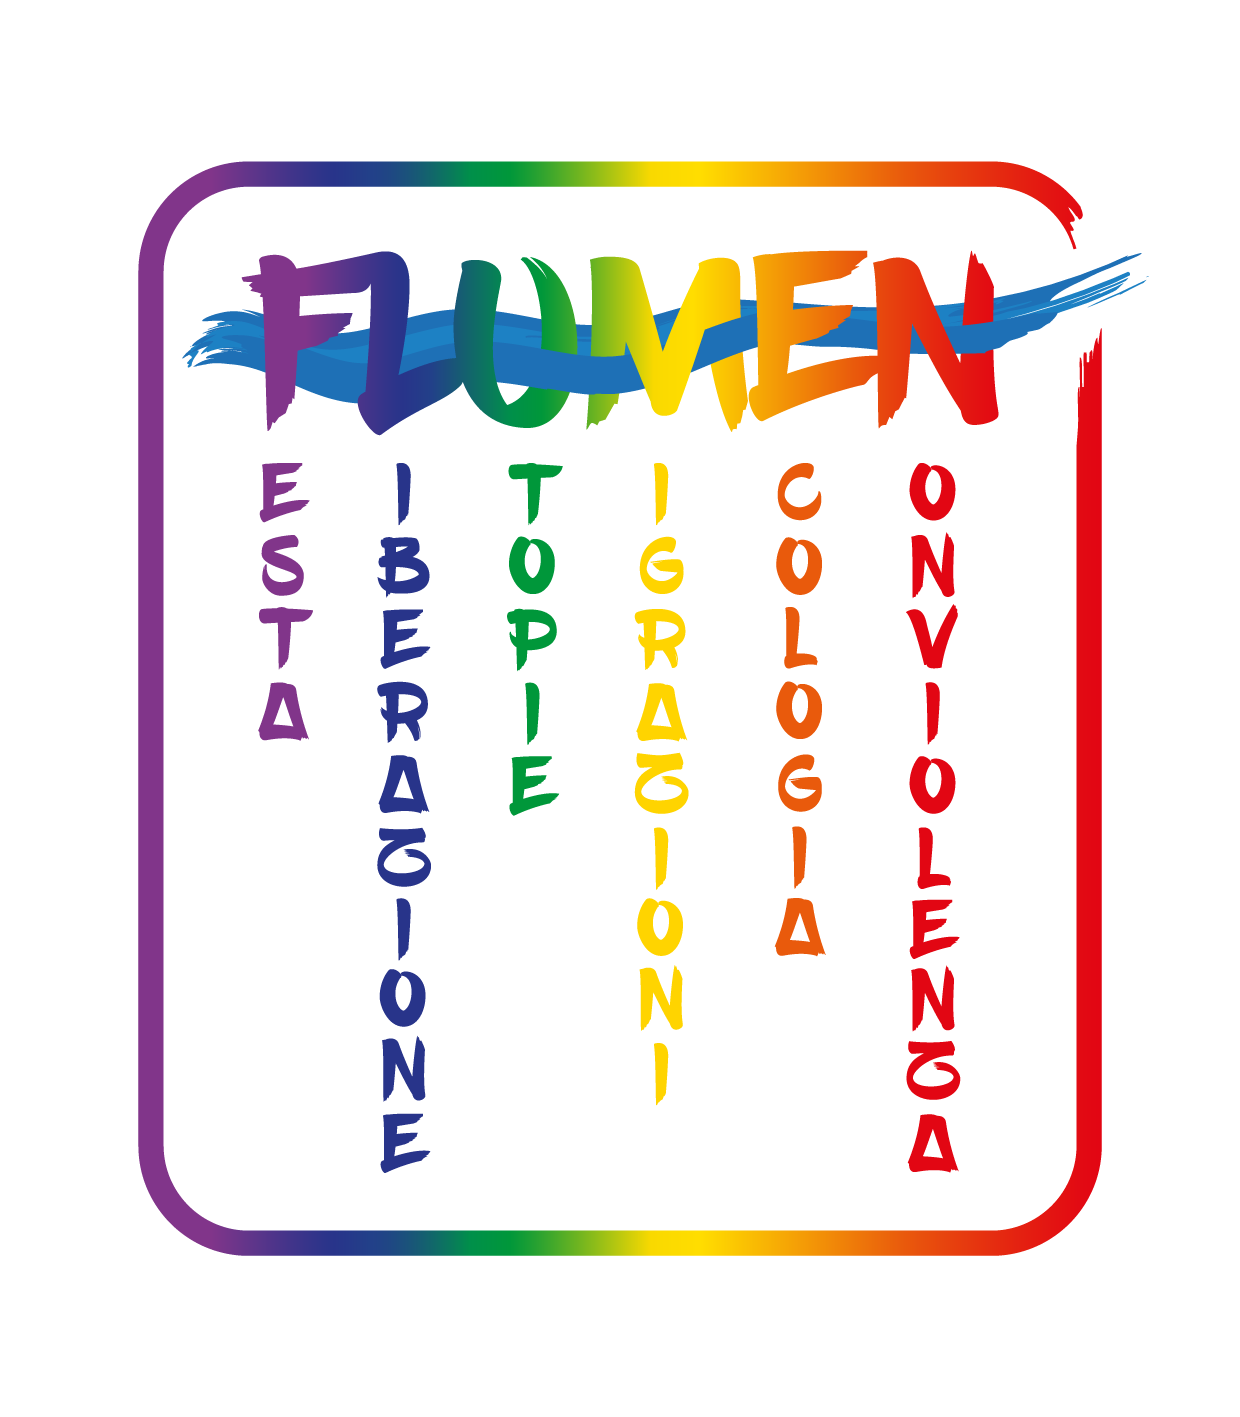 Flumen's logo and acronymous